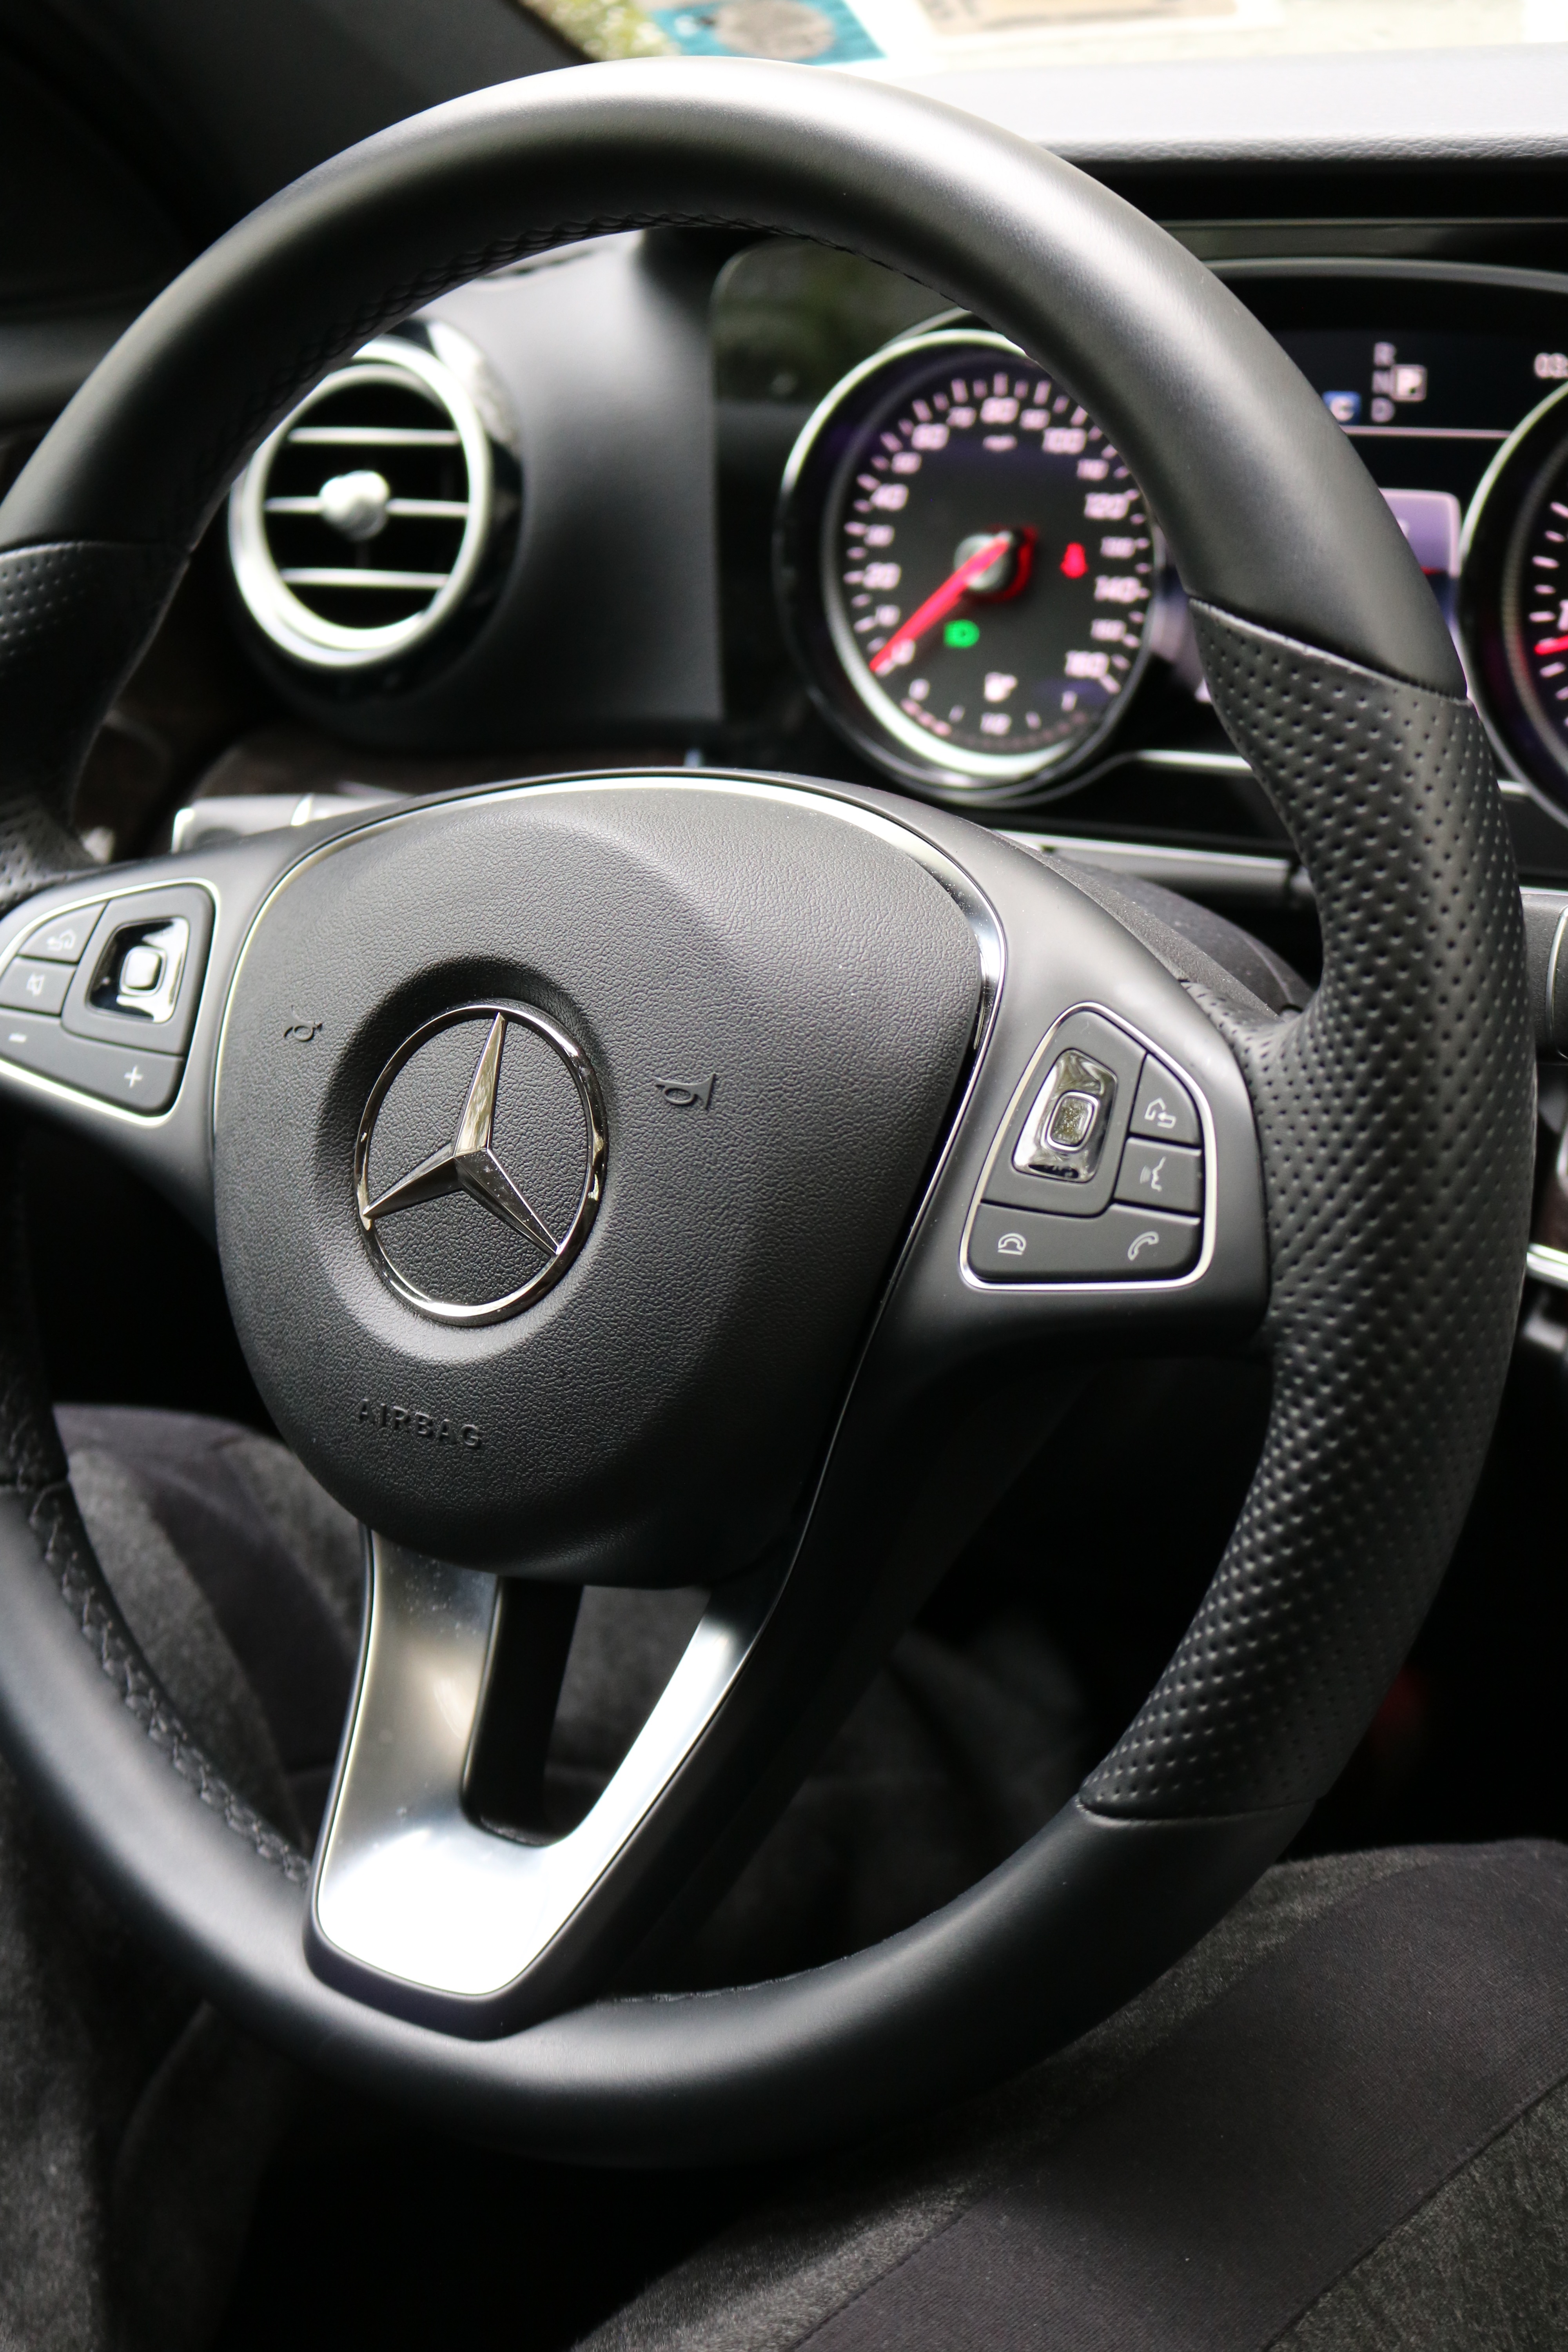 Mercedes Benz E-300 Sterring Wheel Details - The Luxury Lifestyle Magazine